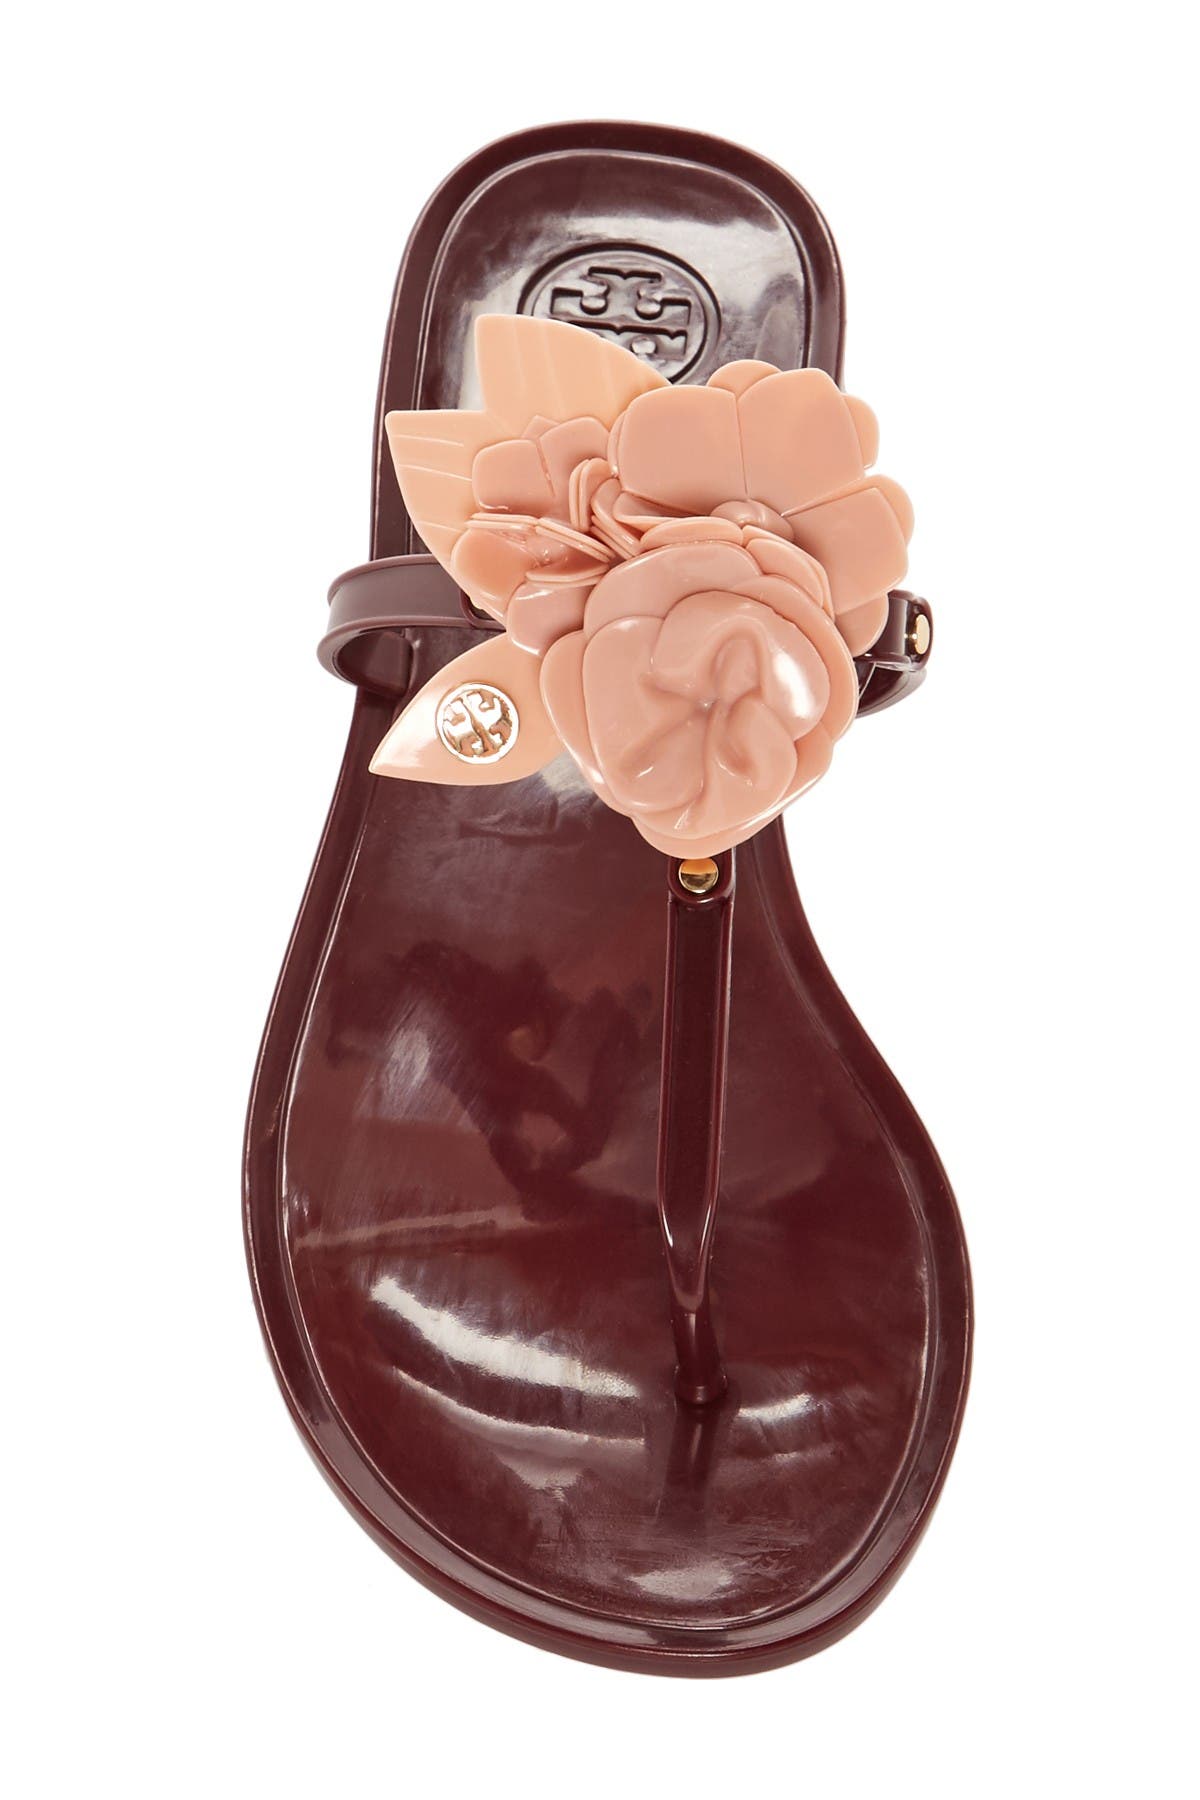 tory burch blossom jelly thong sandal